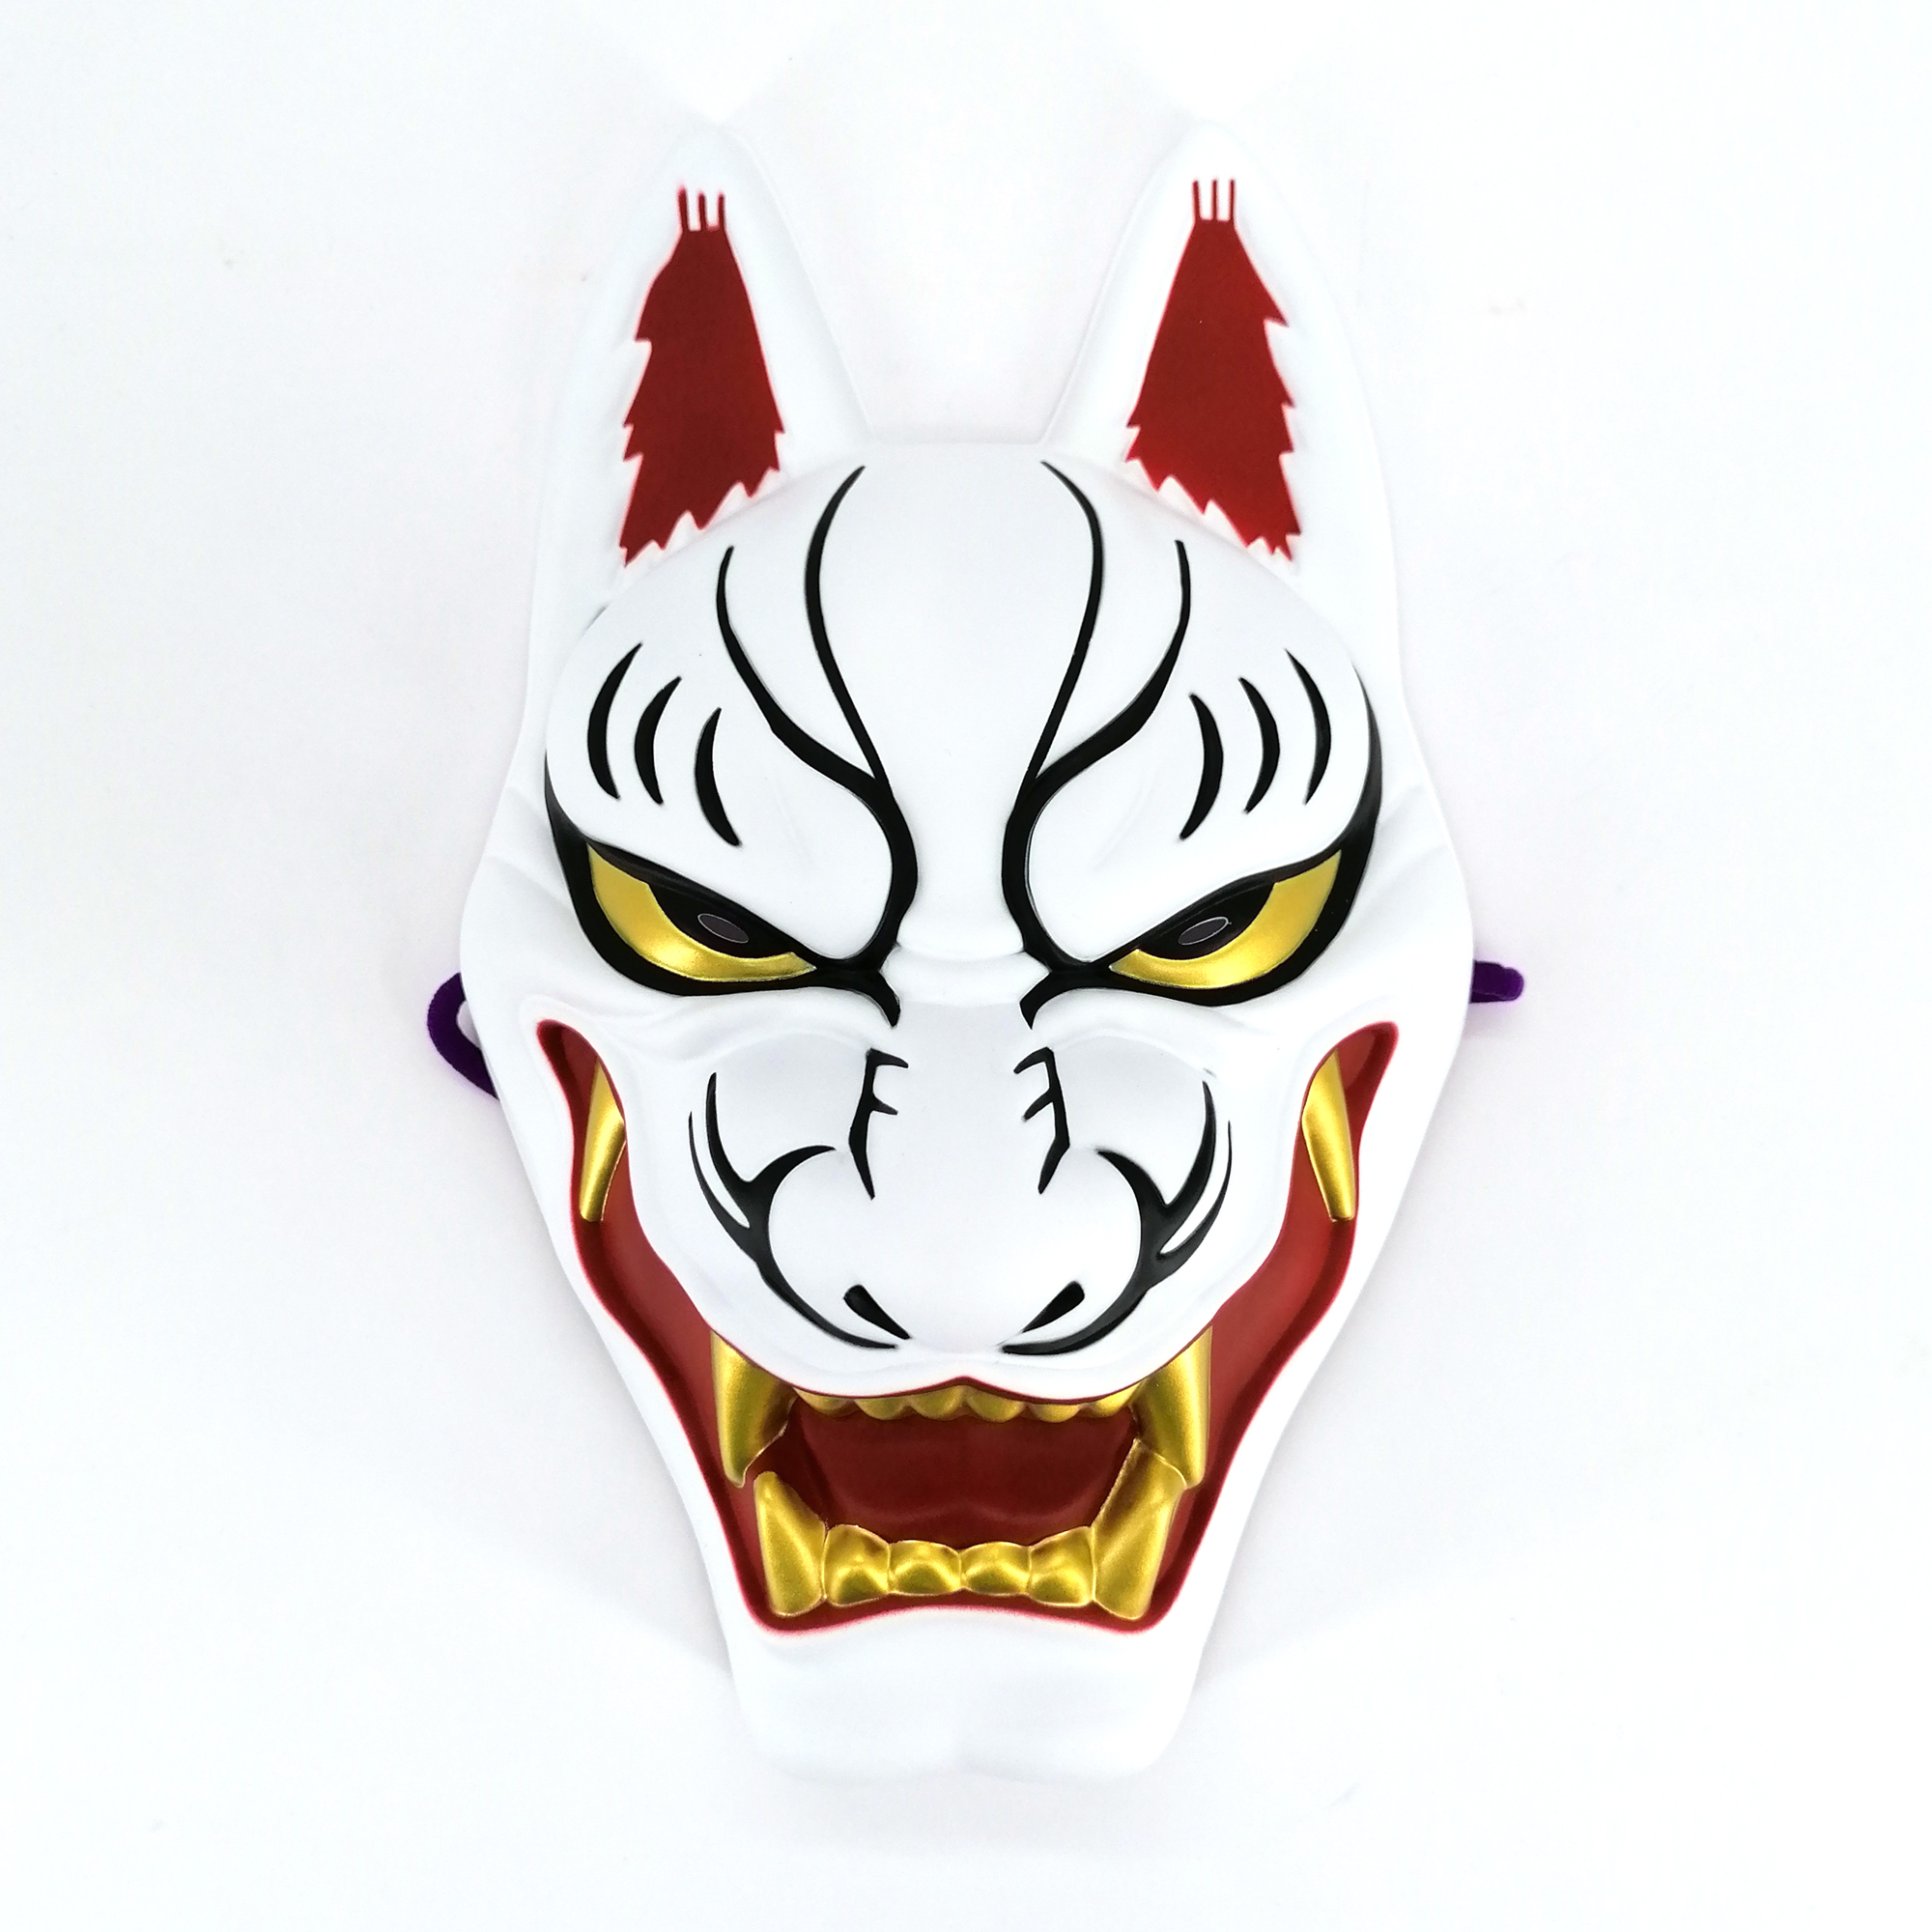 Traditional Japanese Art Kitsune Mask or Fox Japan - Kitsune Mask